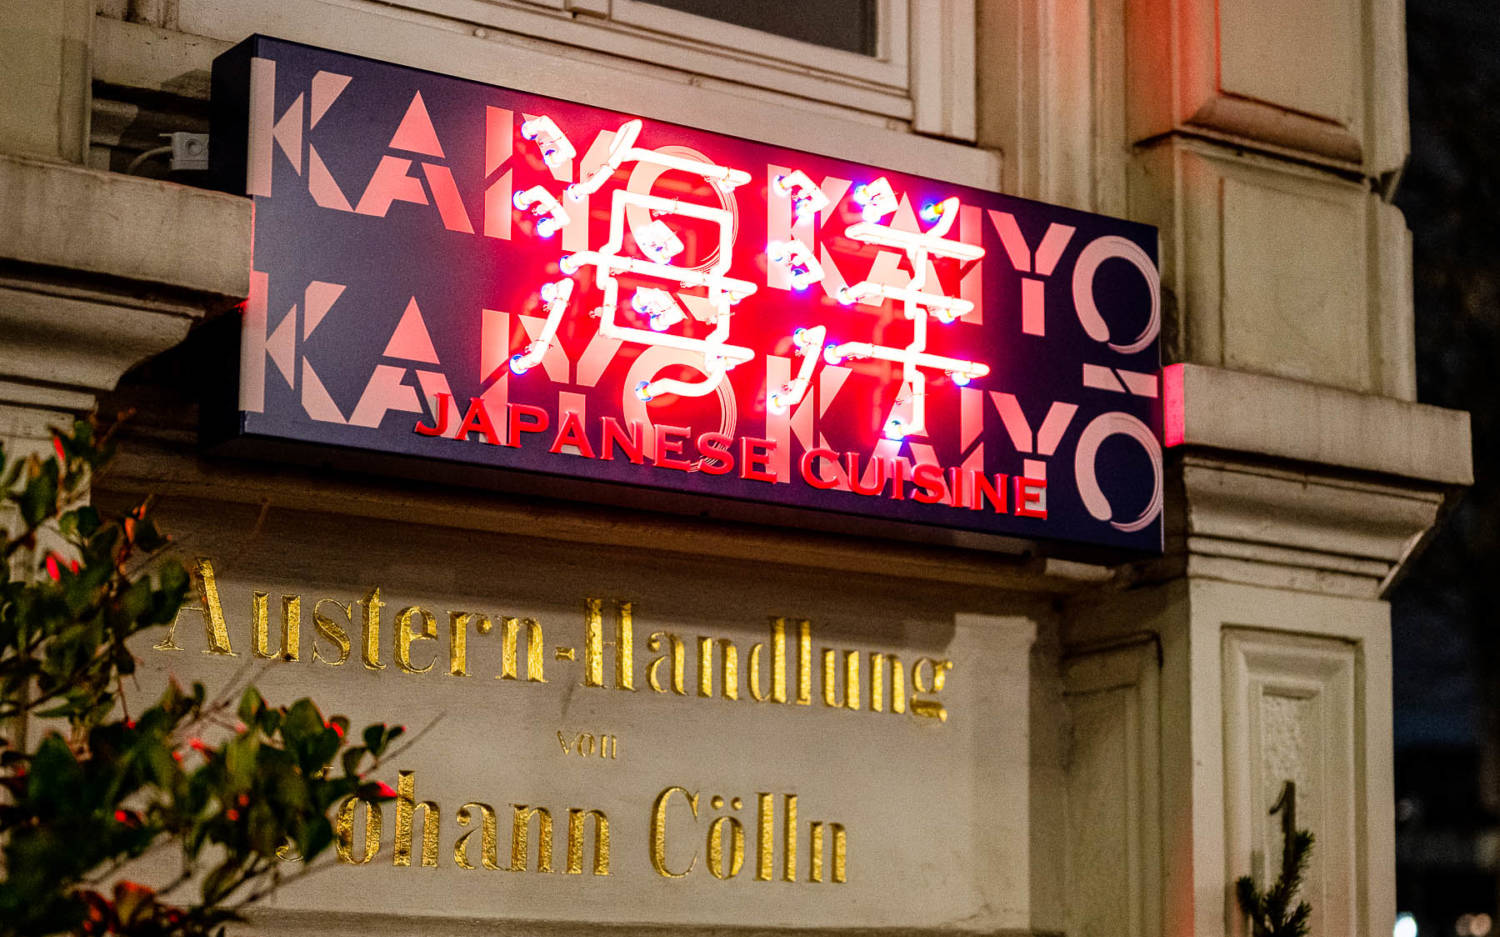 Kaiyo - Japanese Cuisine in der Hamburger Altstadt / ©Juan Molina